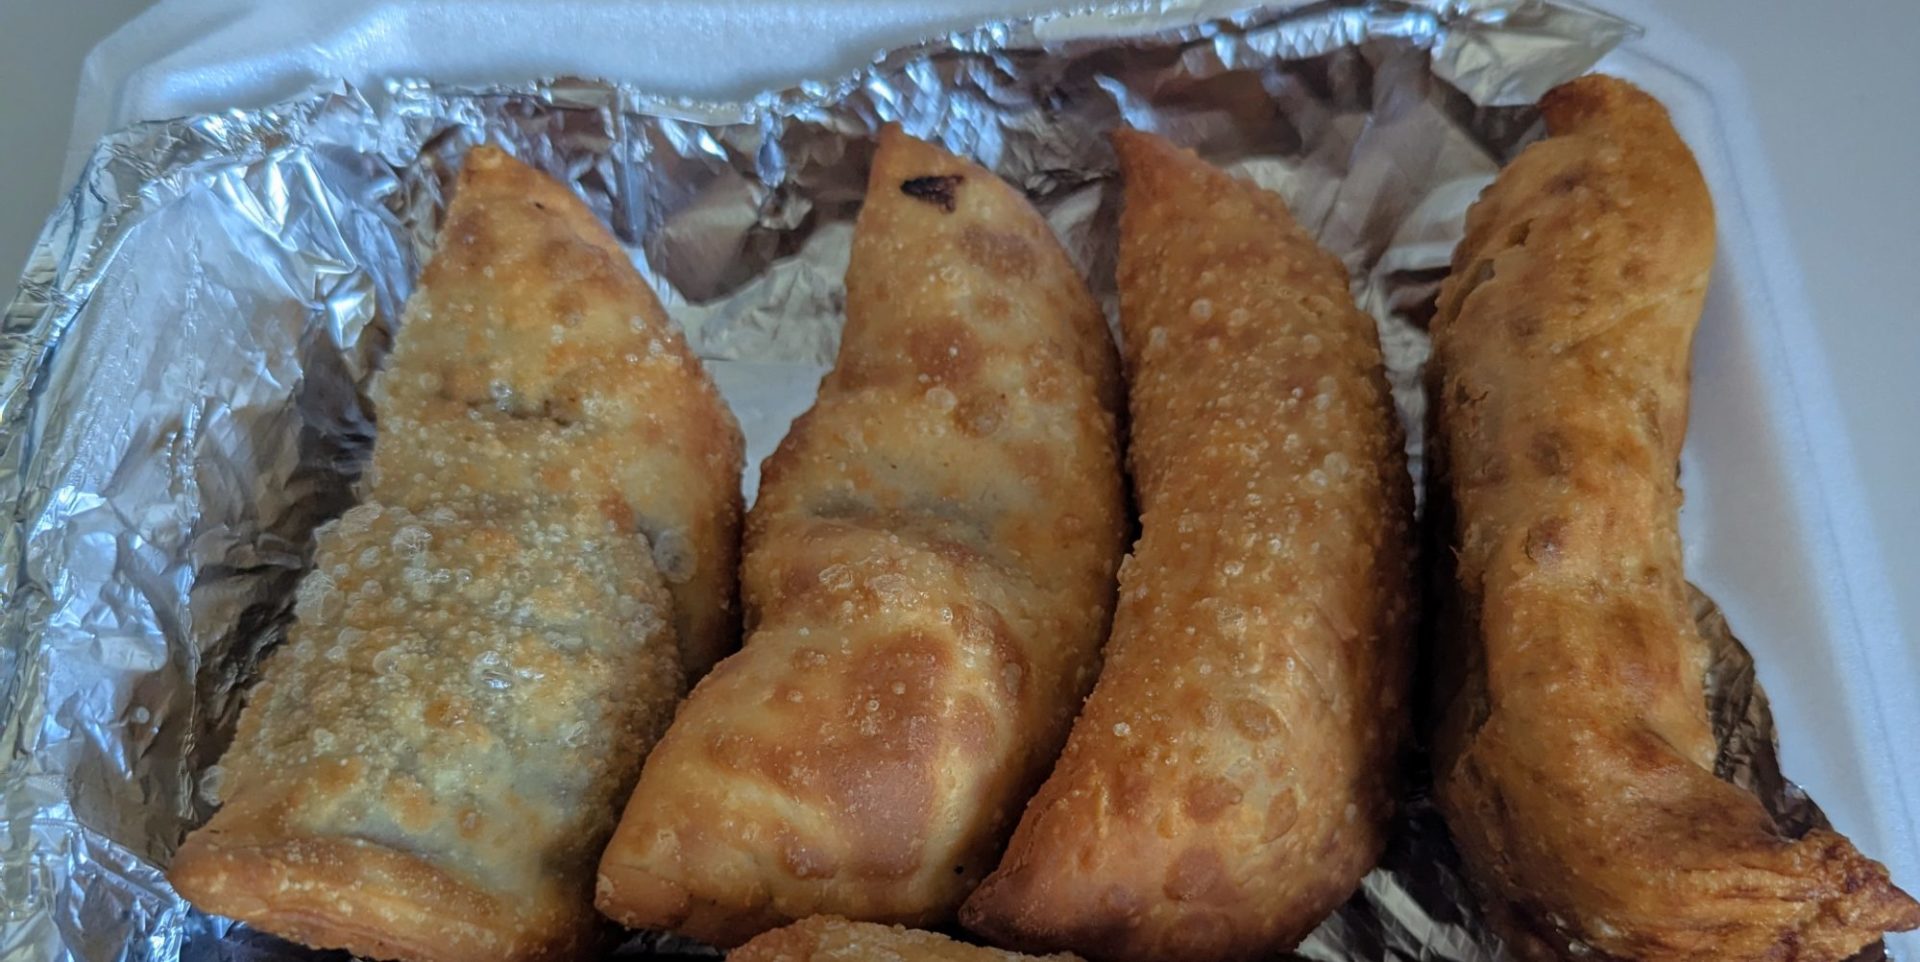 Four fried empanadas in a tin-foil lined box.